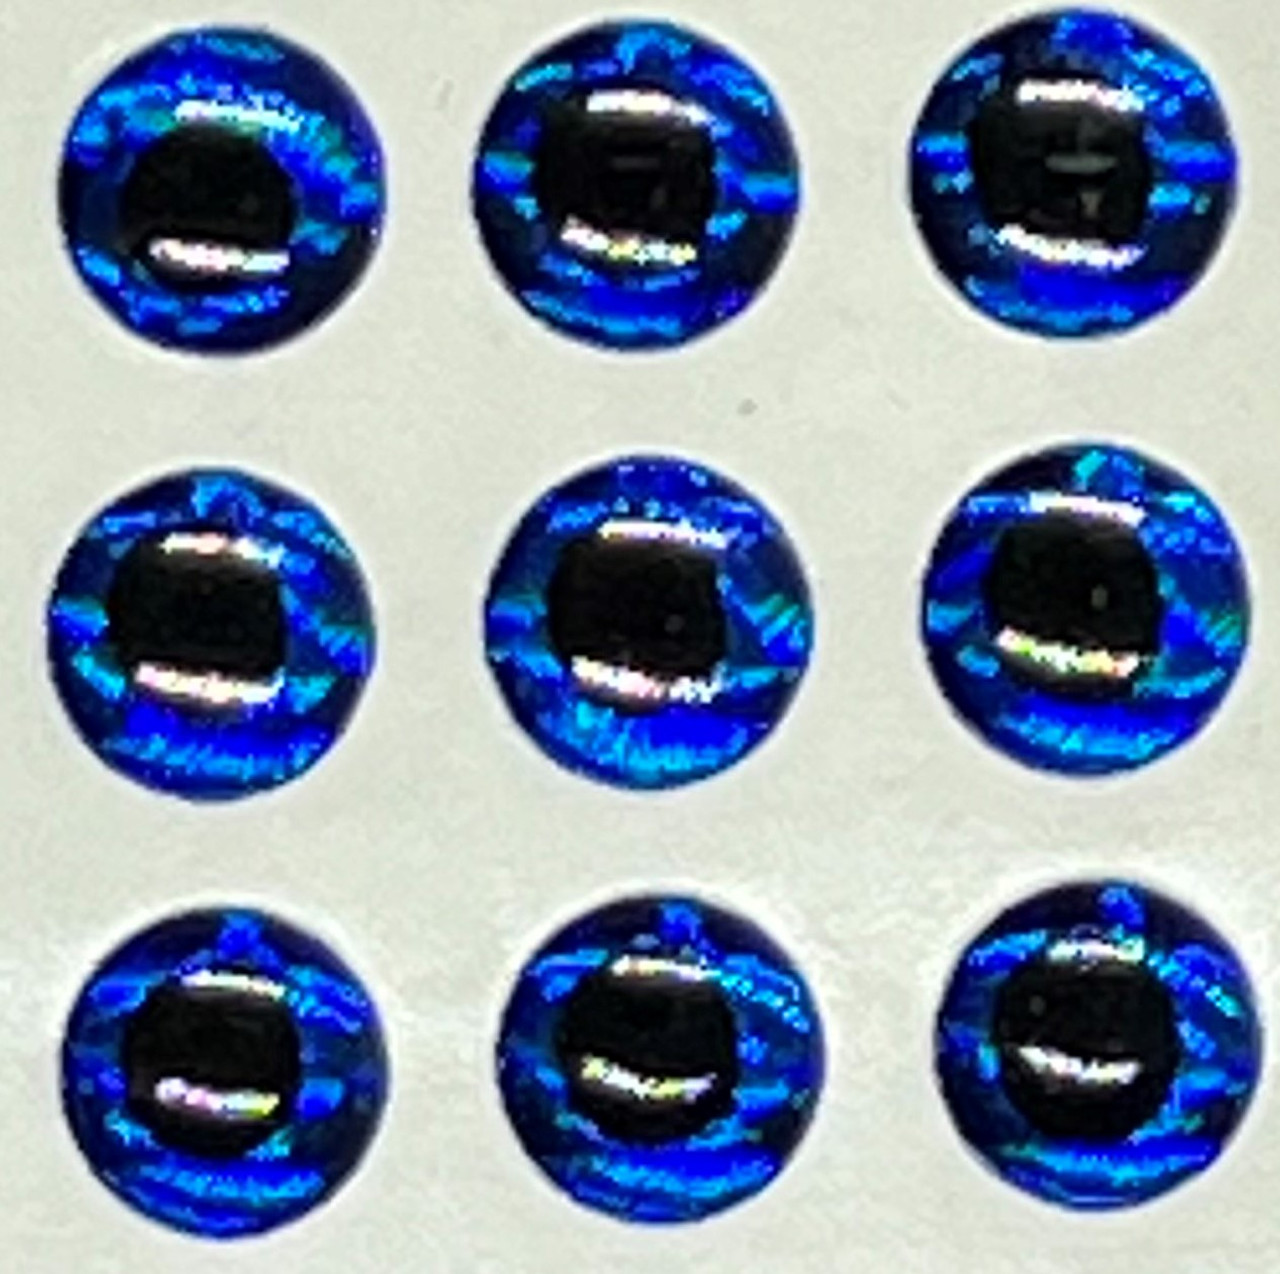 Fishhead Custom Lures 4 mm 3D lure eyes - Blue/Black Pupil